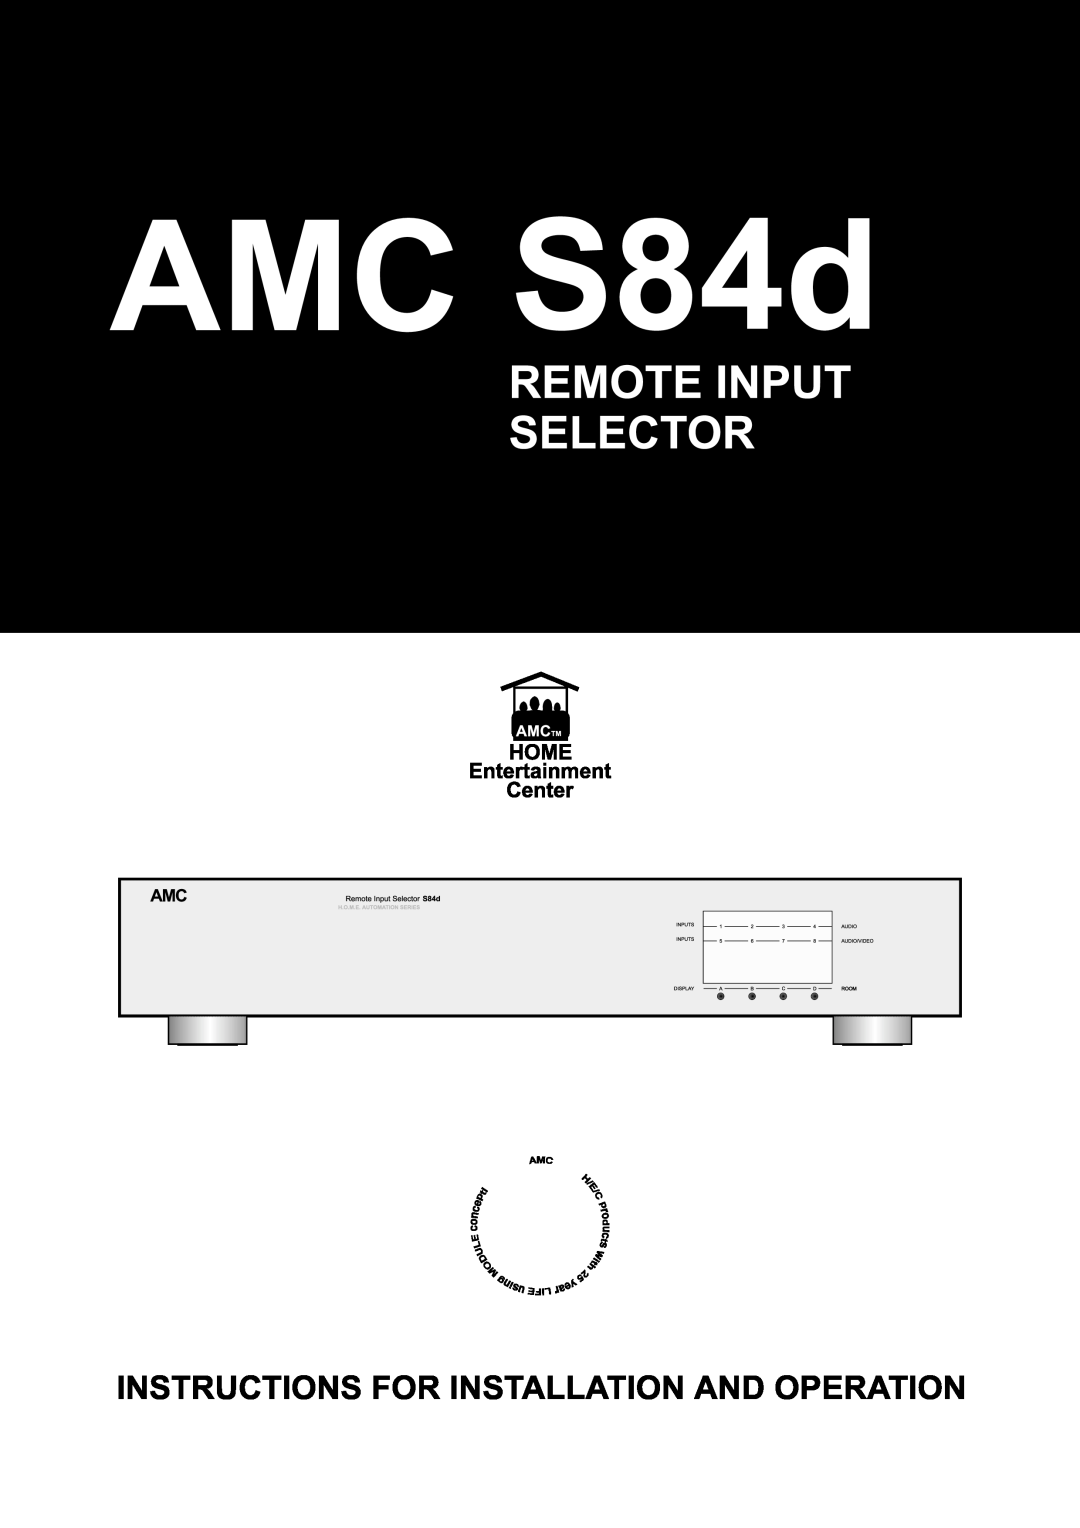 AMC S84d manual 